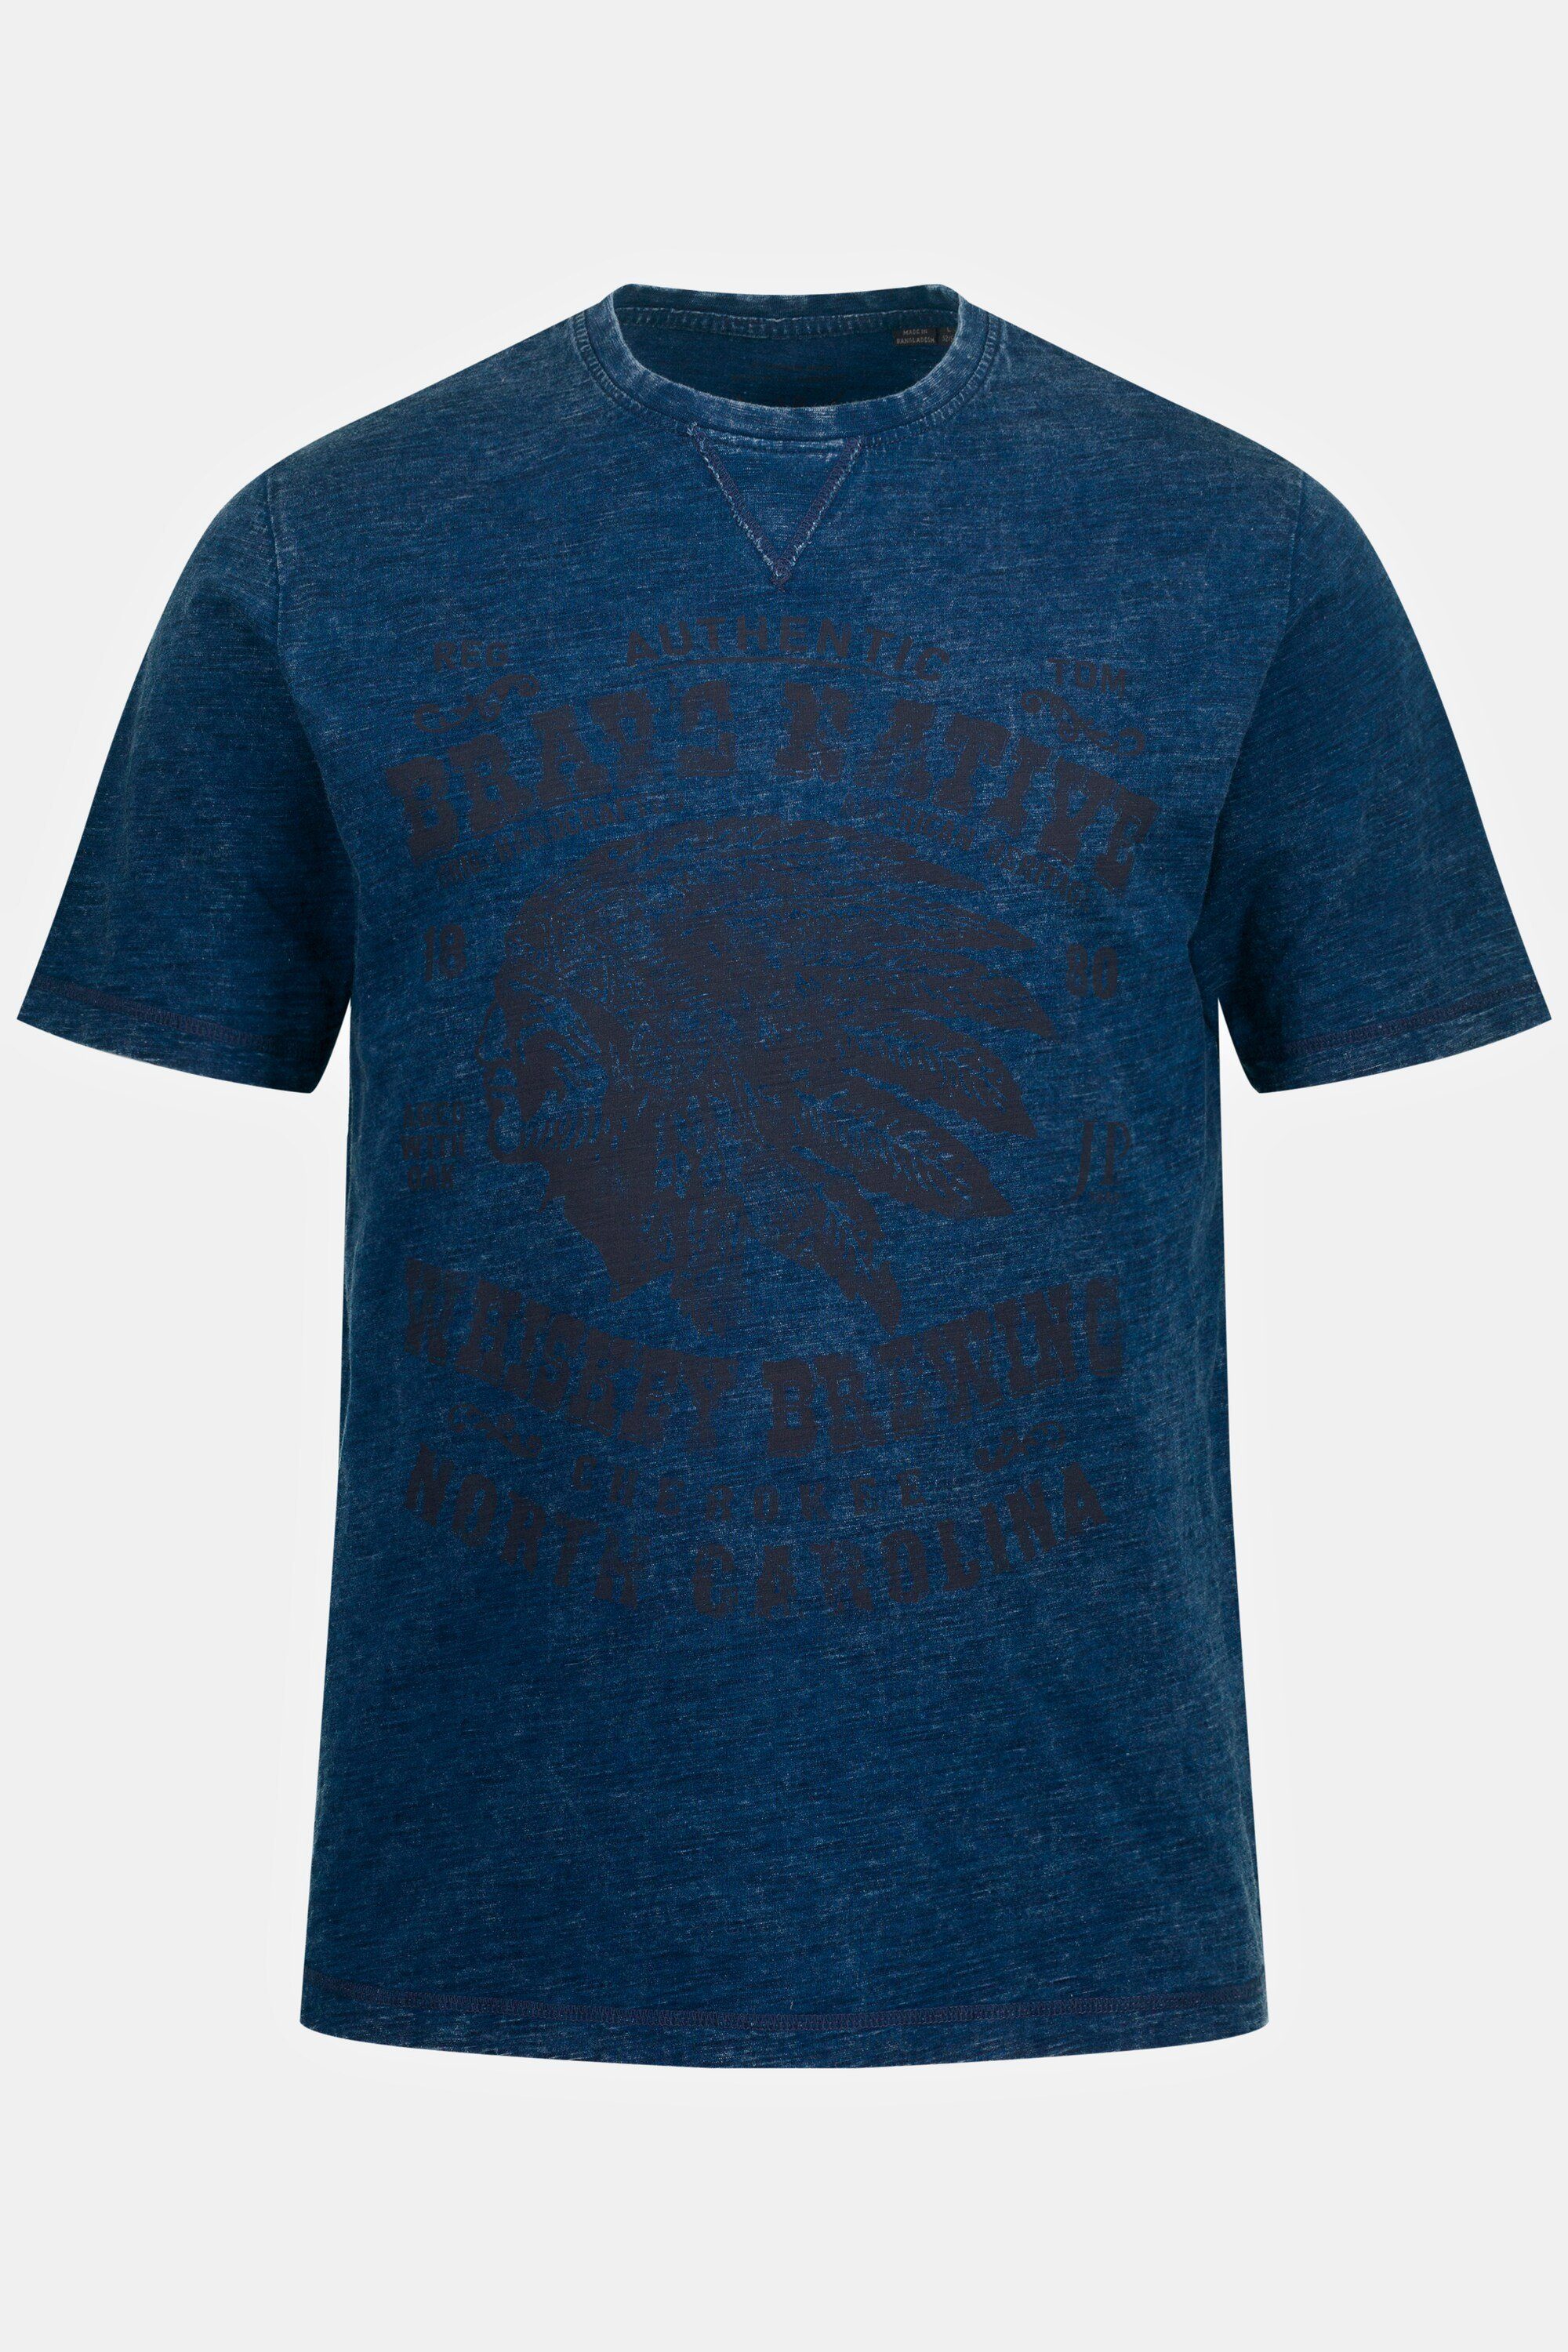 Print Indigo-Färbung T-Shirt T-Shirt Halbarm Rundhals JP1880